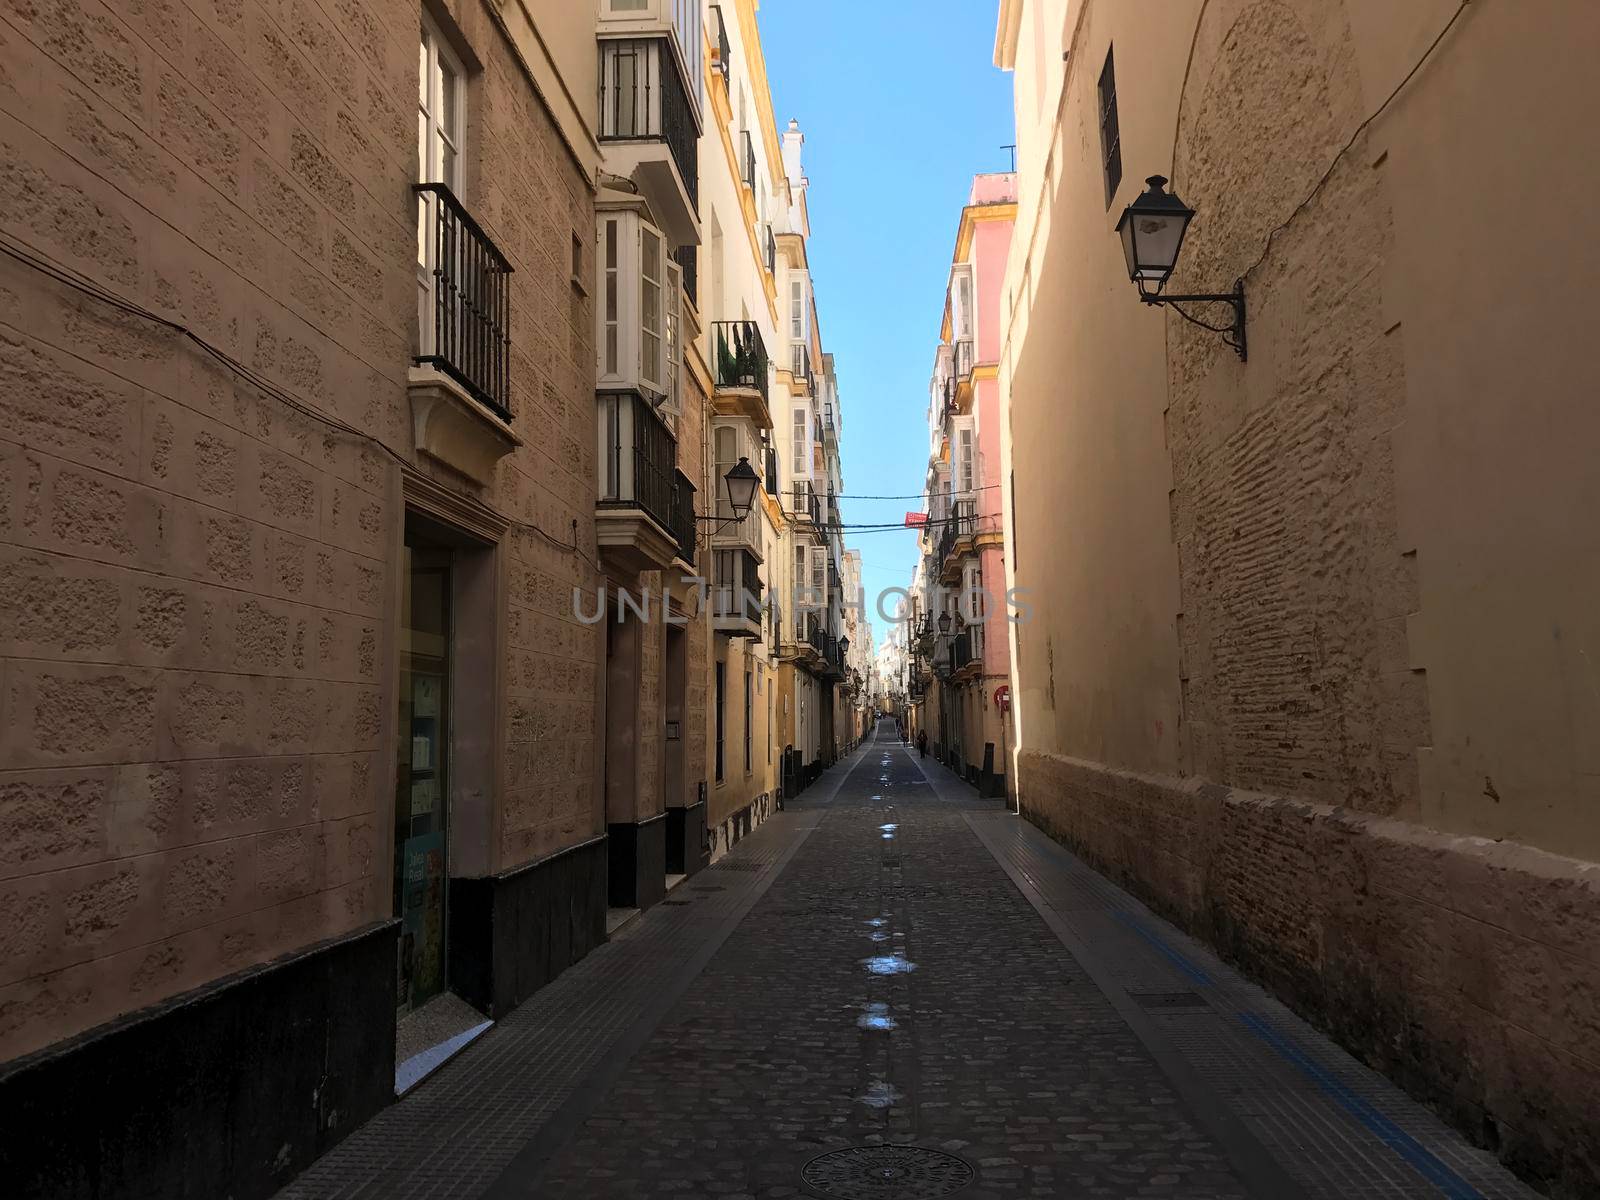 Streets in Cadiz by traveltelly